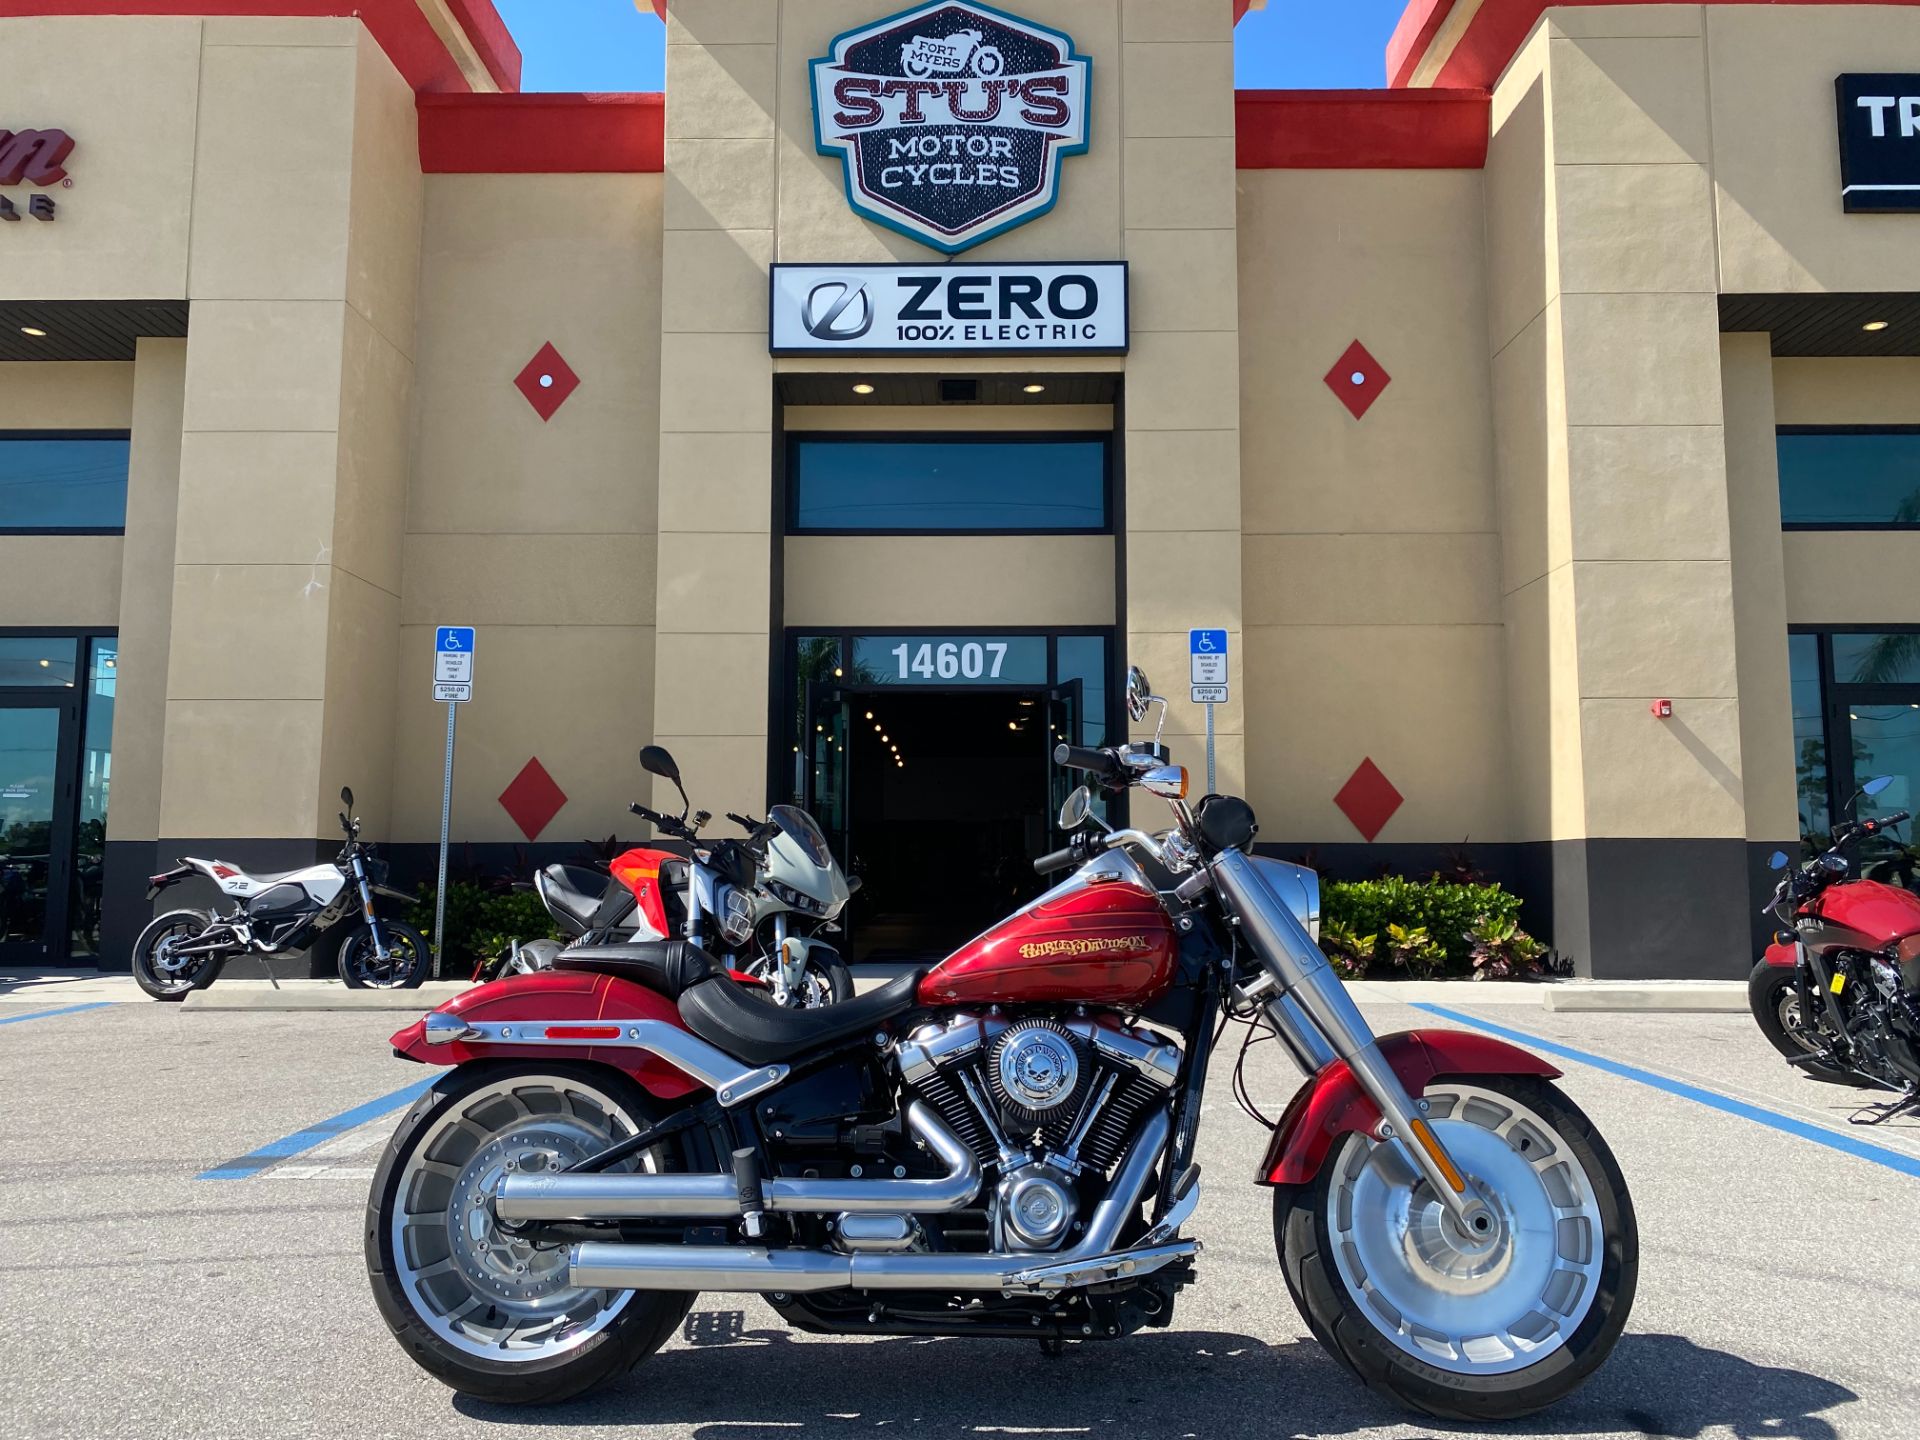 2018 Harley-Davidson Fat Boy® 107 in Fort Myers, Florida - Photo 1